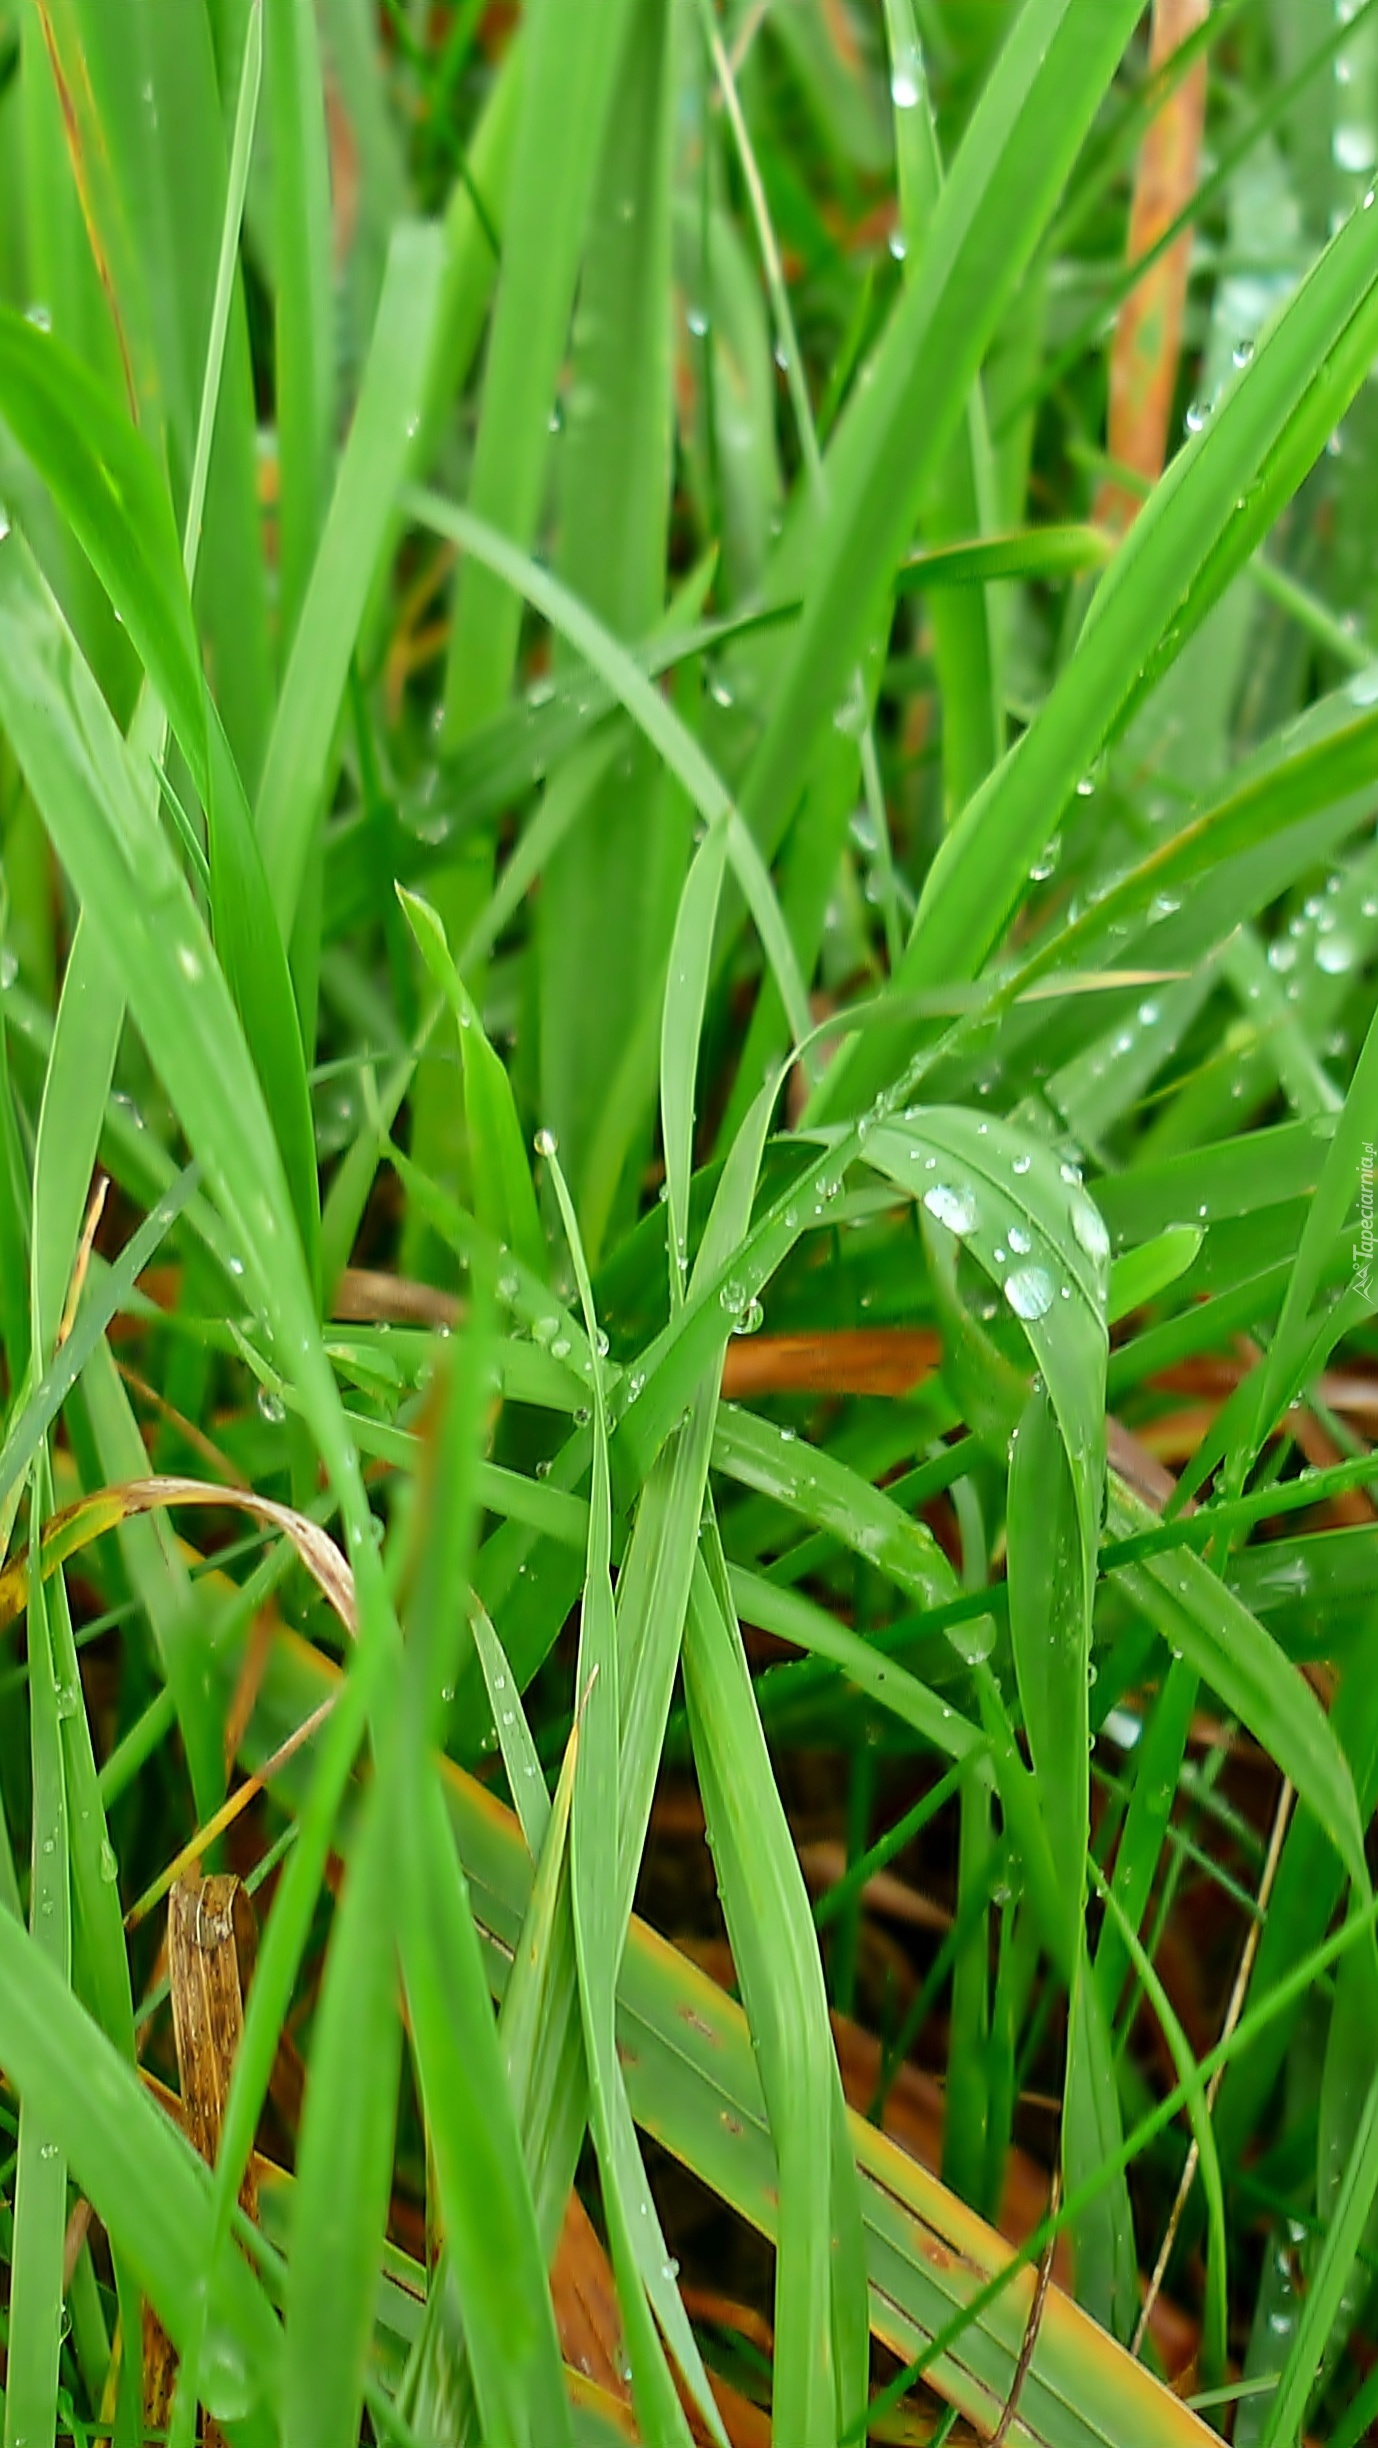 Zielona trawa w kropelkach wody